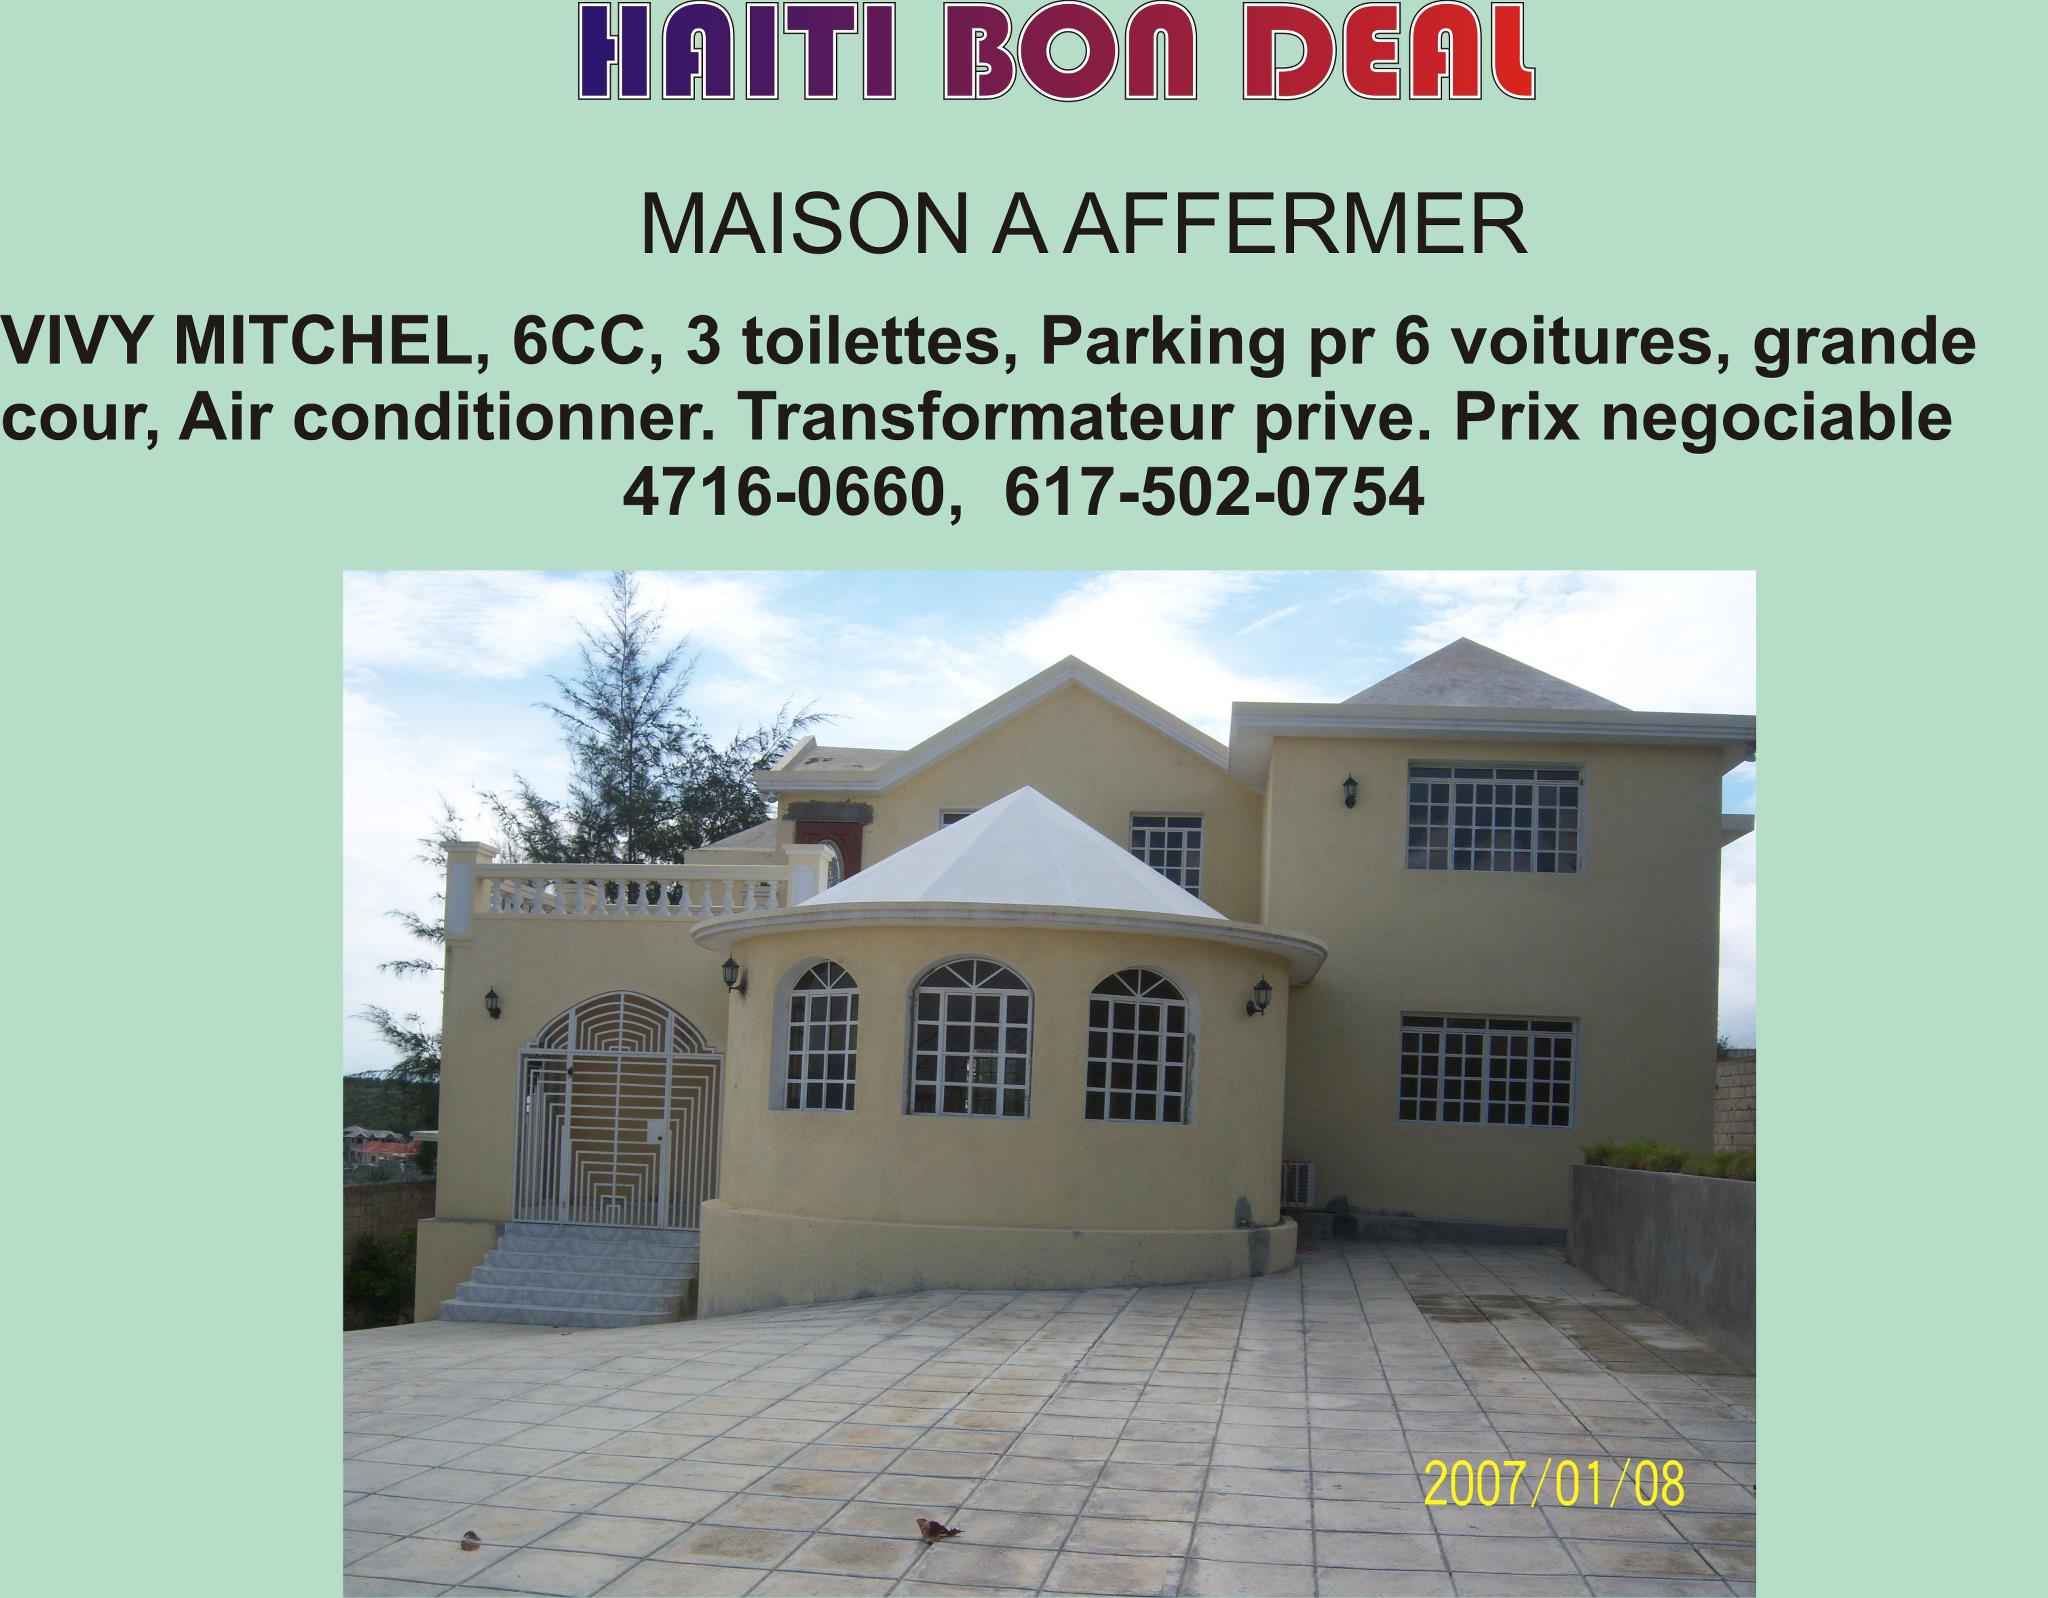 Haiti Bon Deal